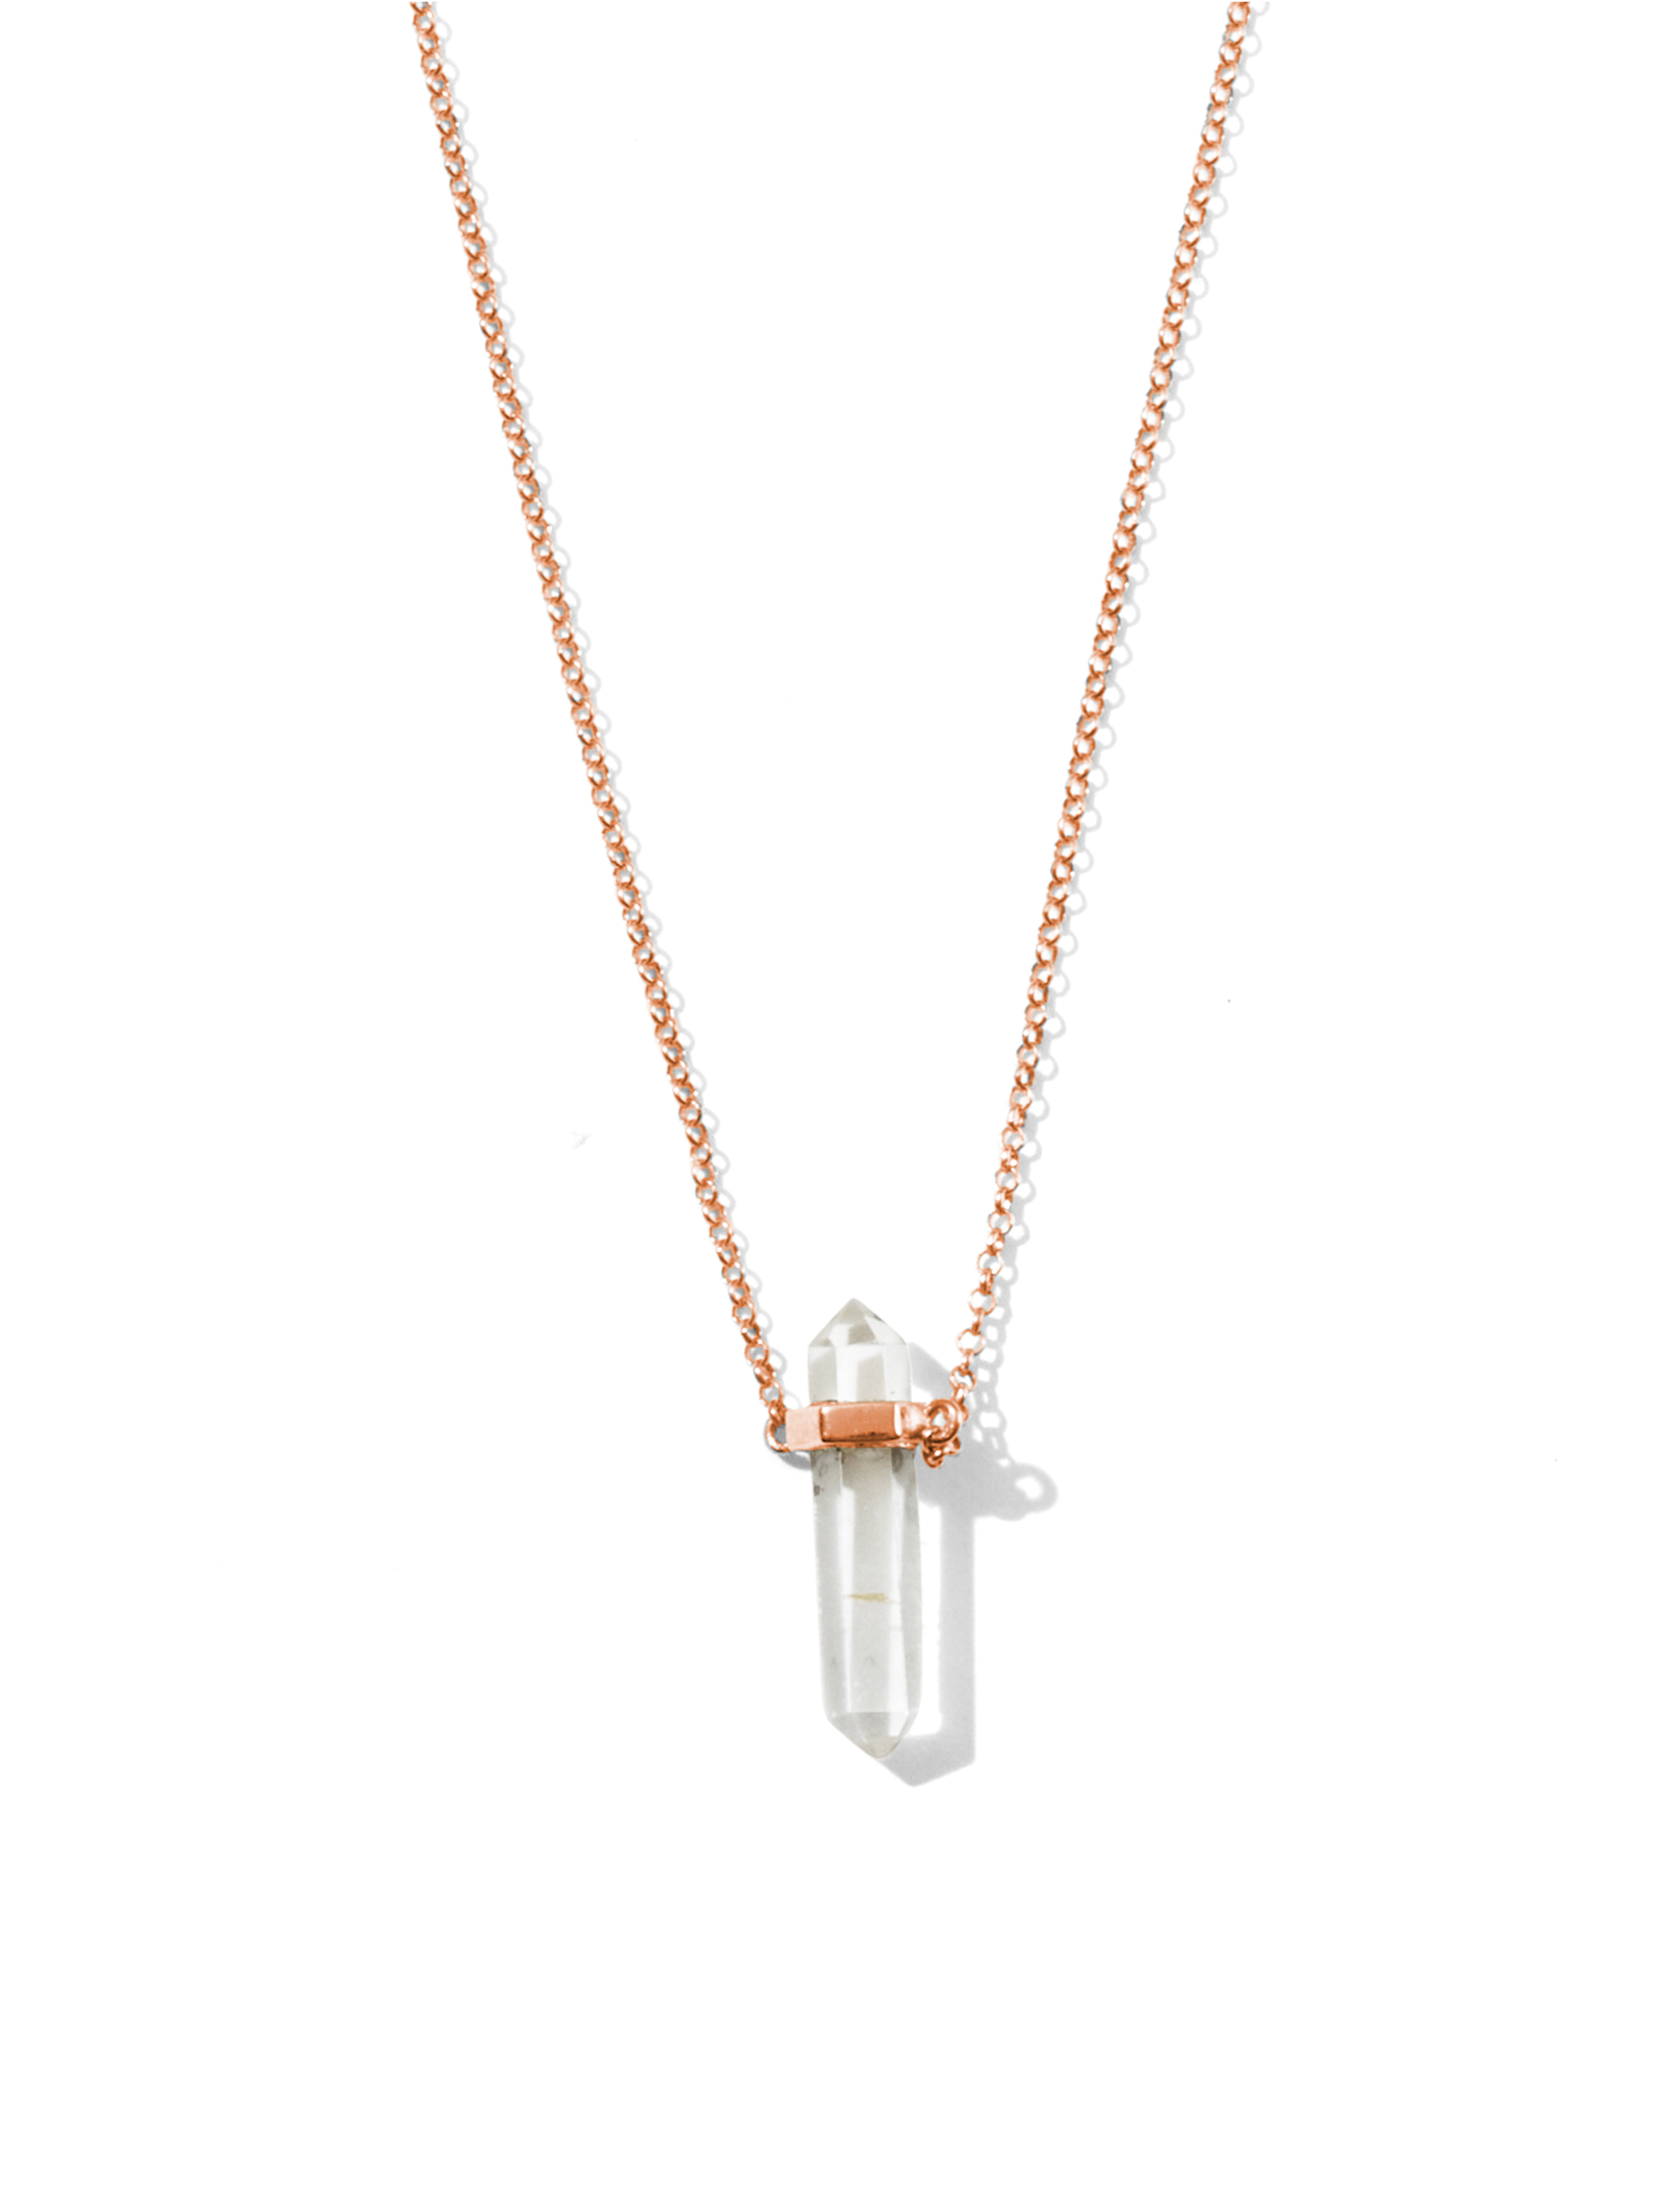 lunar quartz necklace | clear quartz ROSE GOLD PLATED